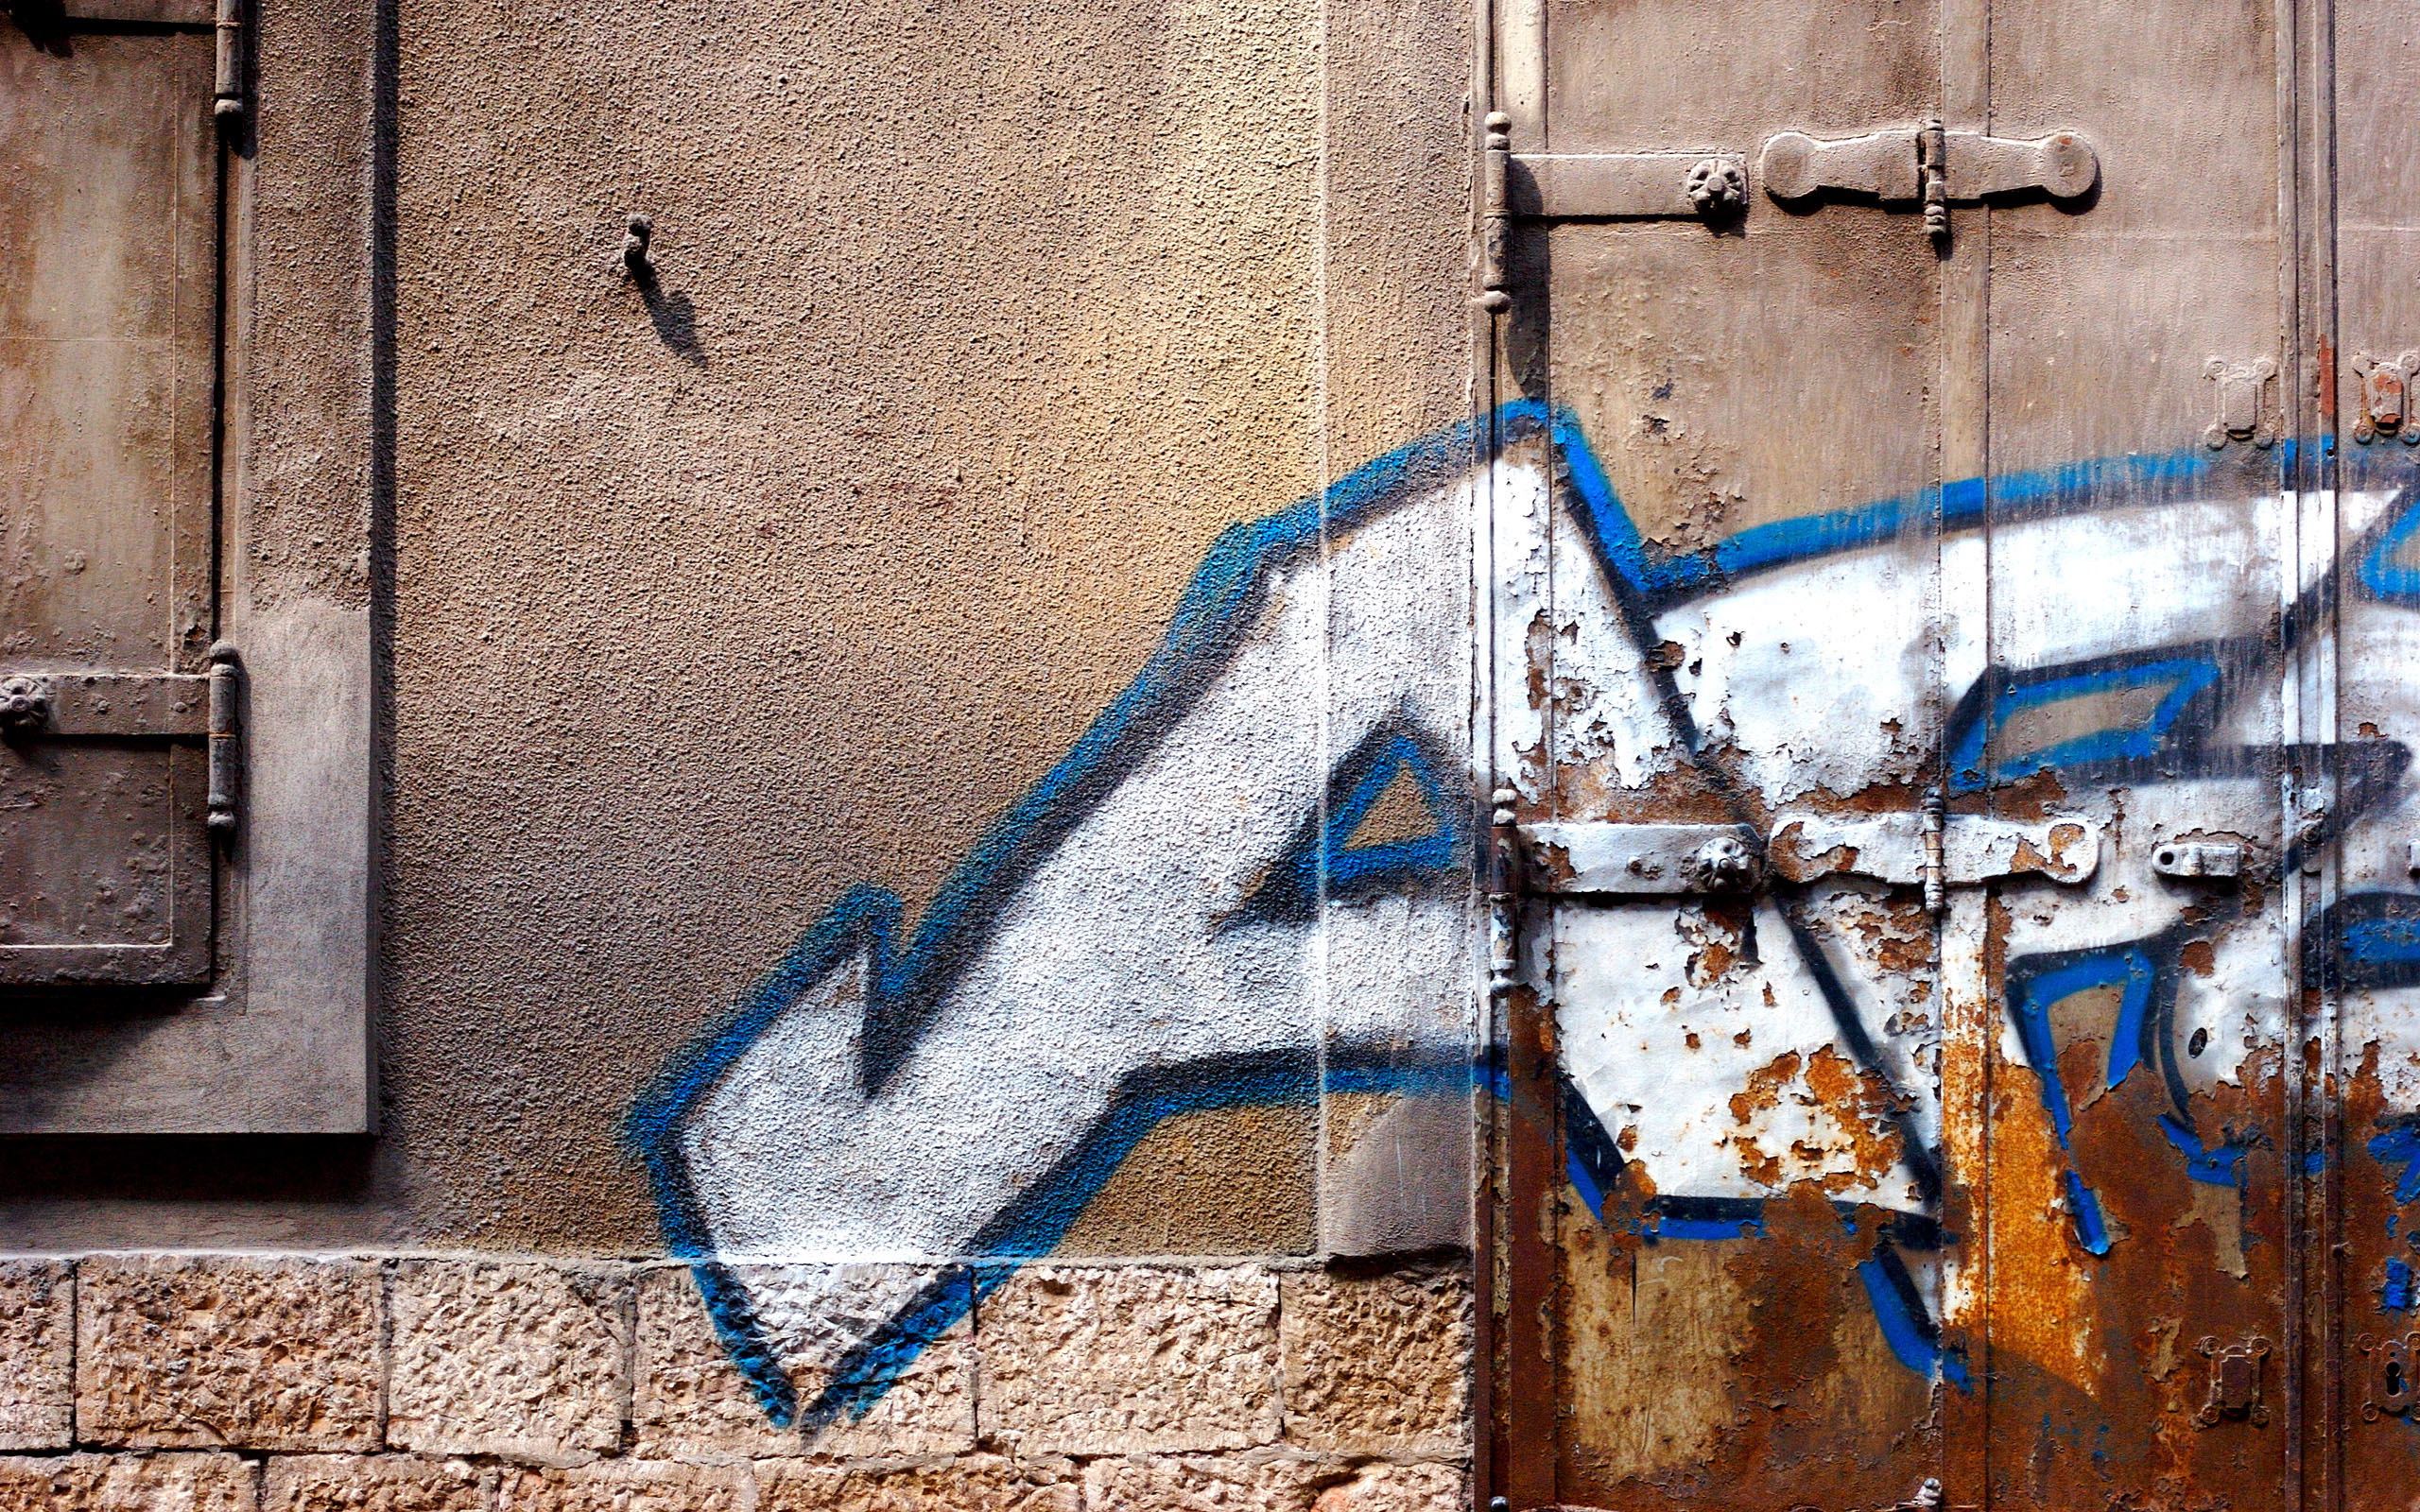 Graffiti Street Art Wallpaper Amp Pictures